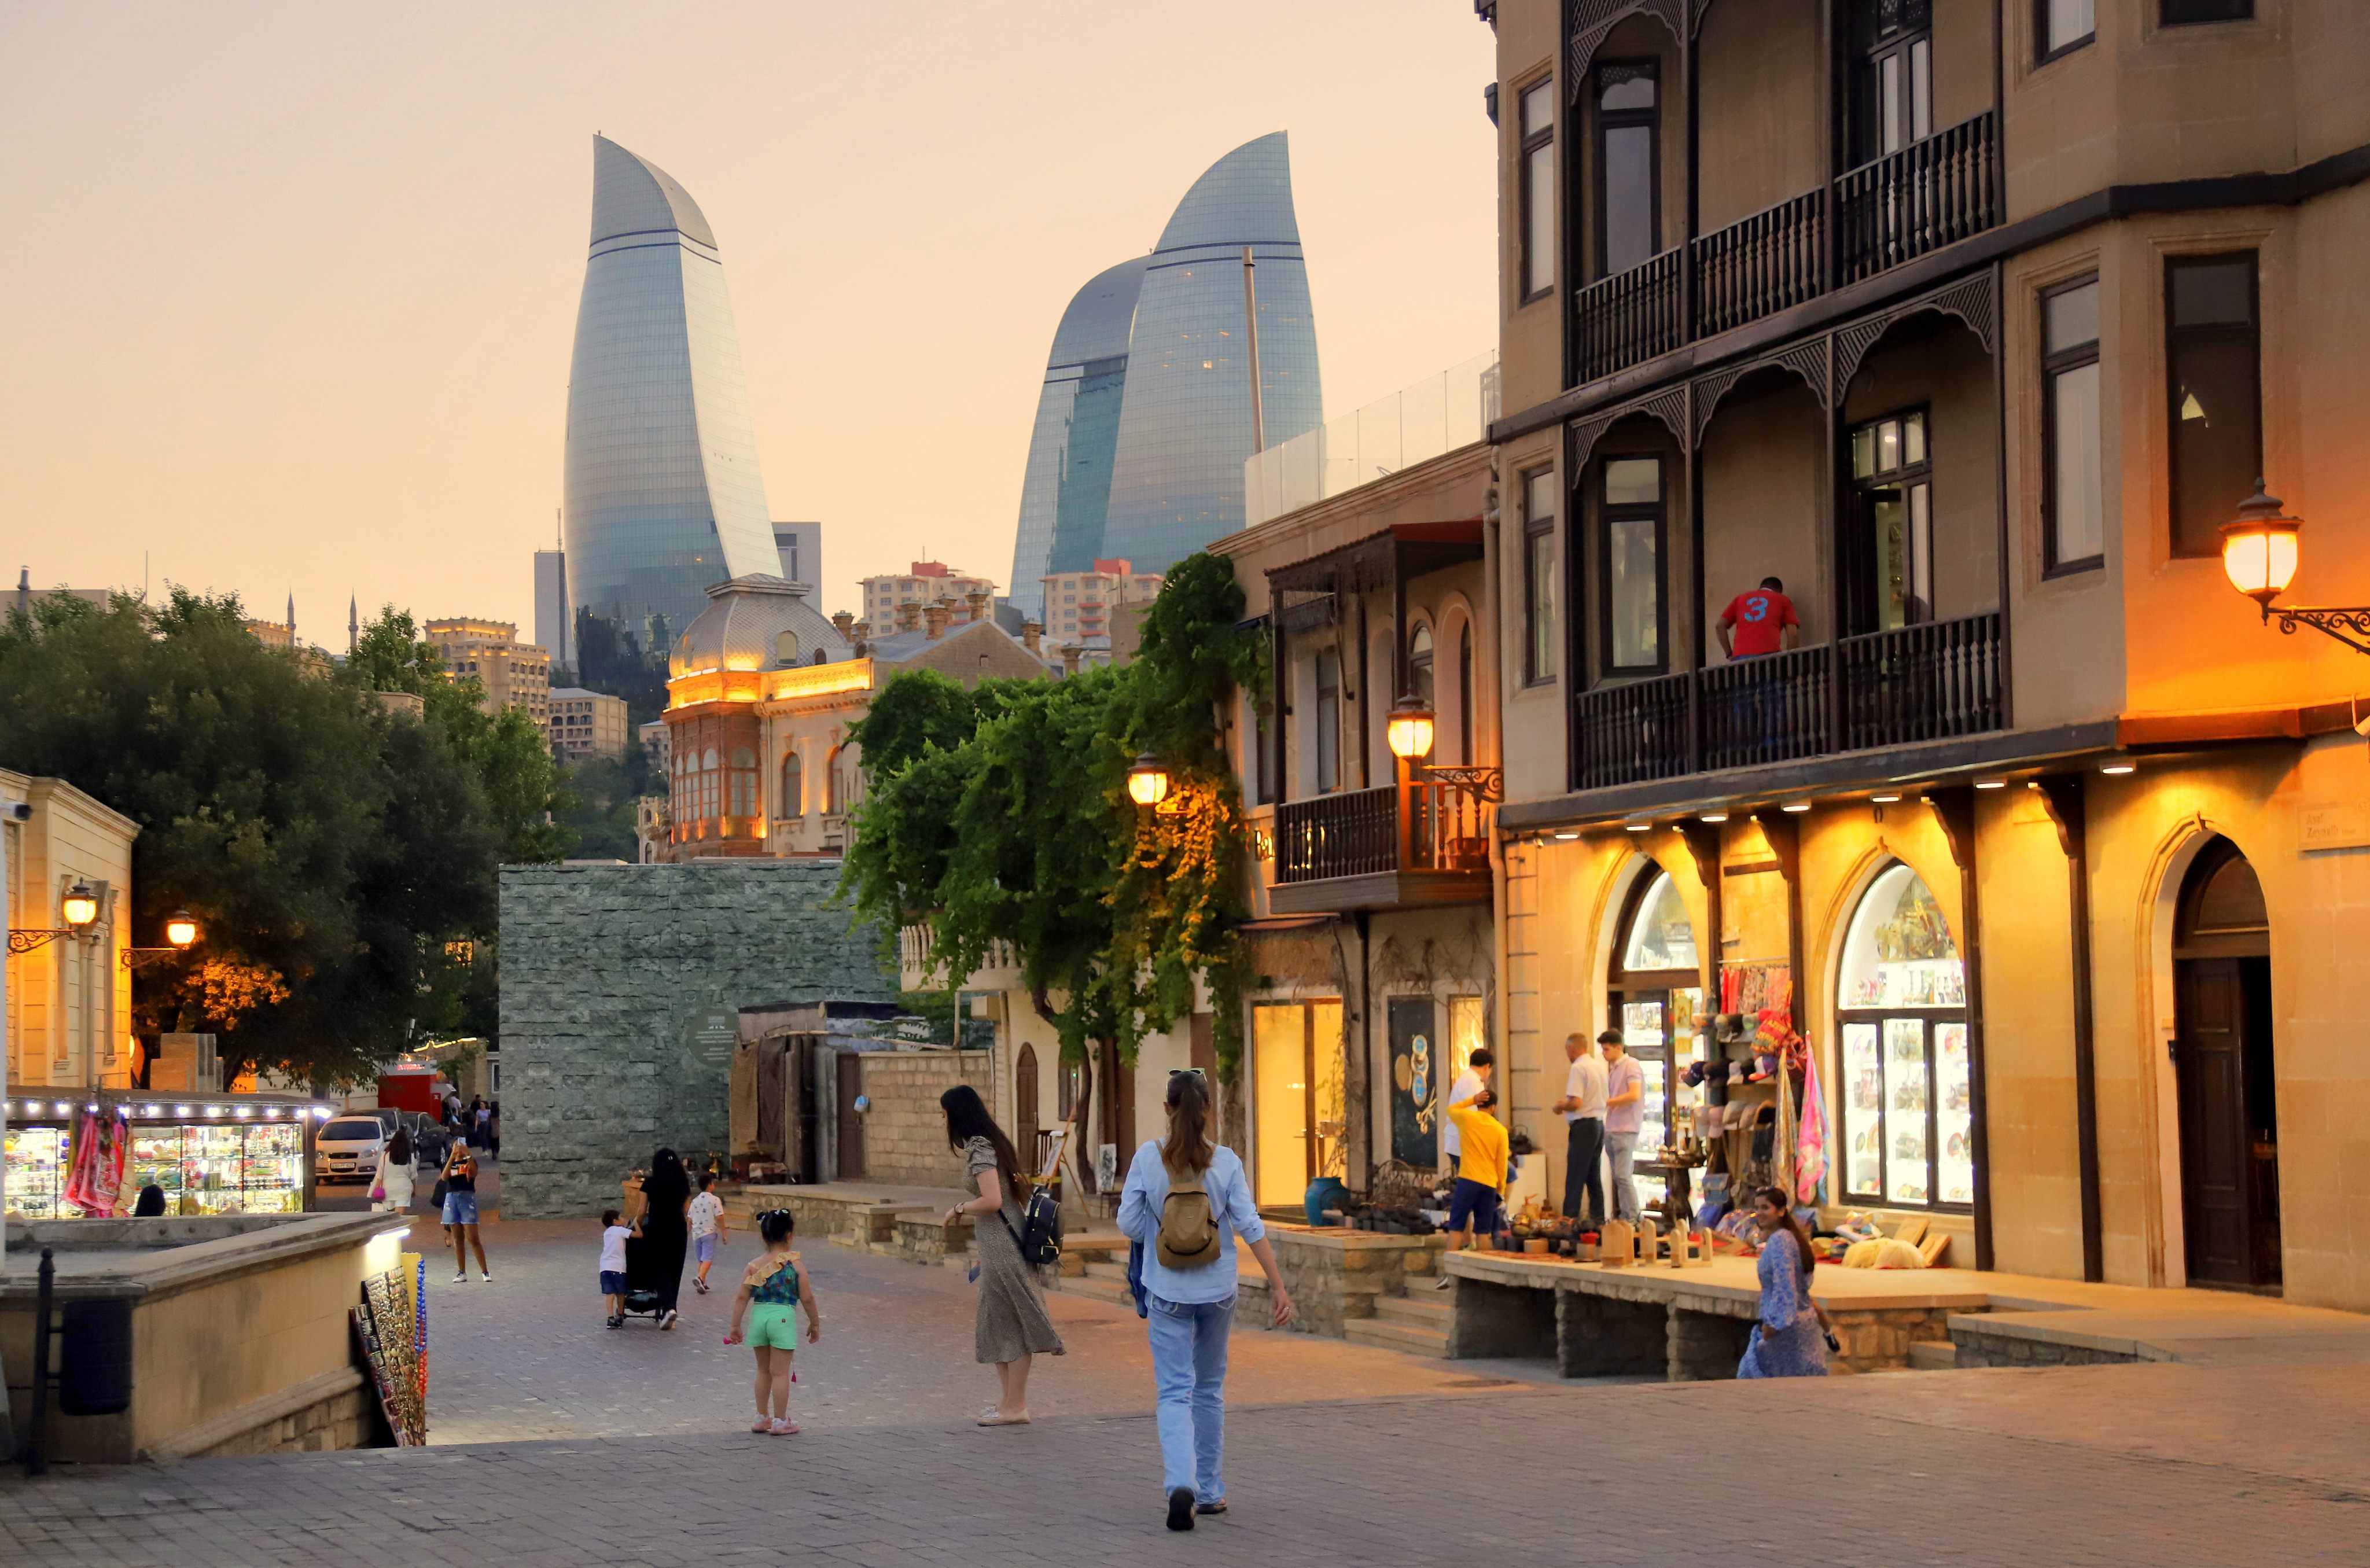 Old and new architecture in Baku, Azerbaijan. Photo: Sundeep Kumar